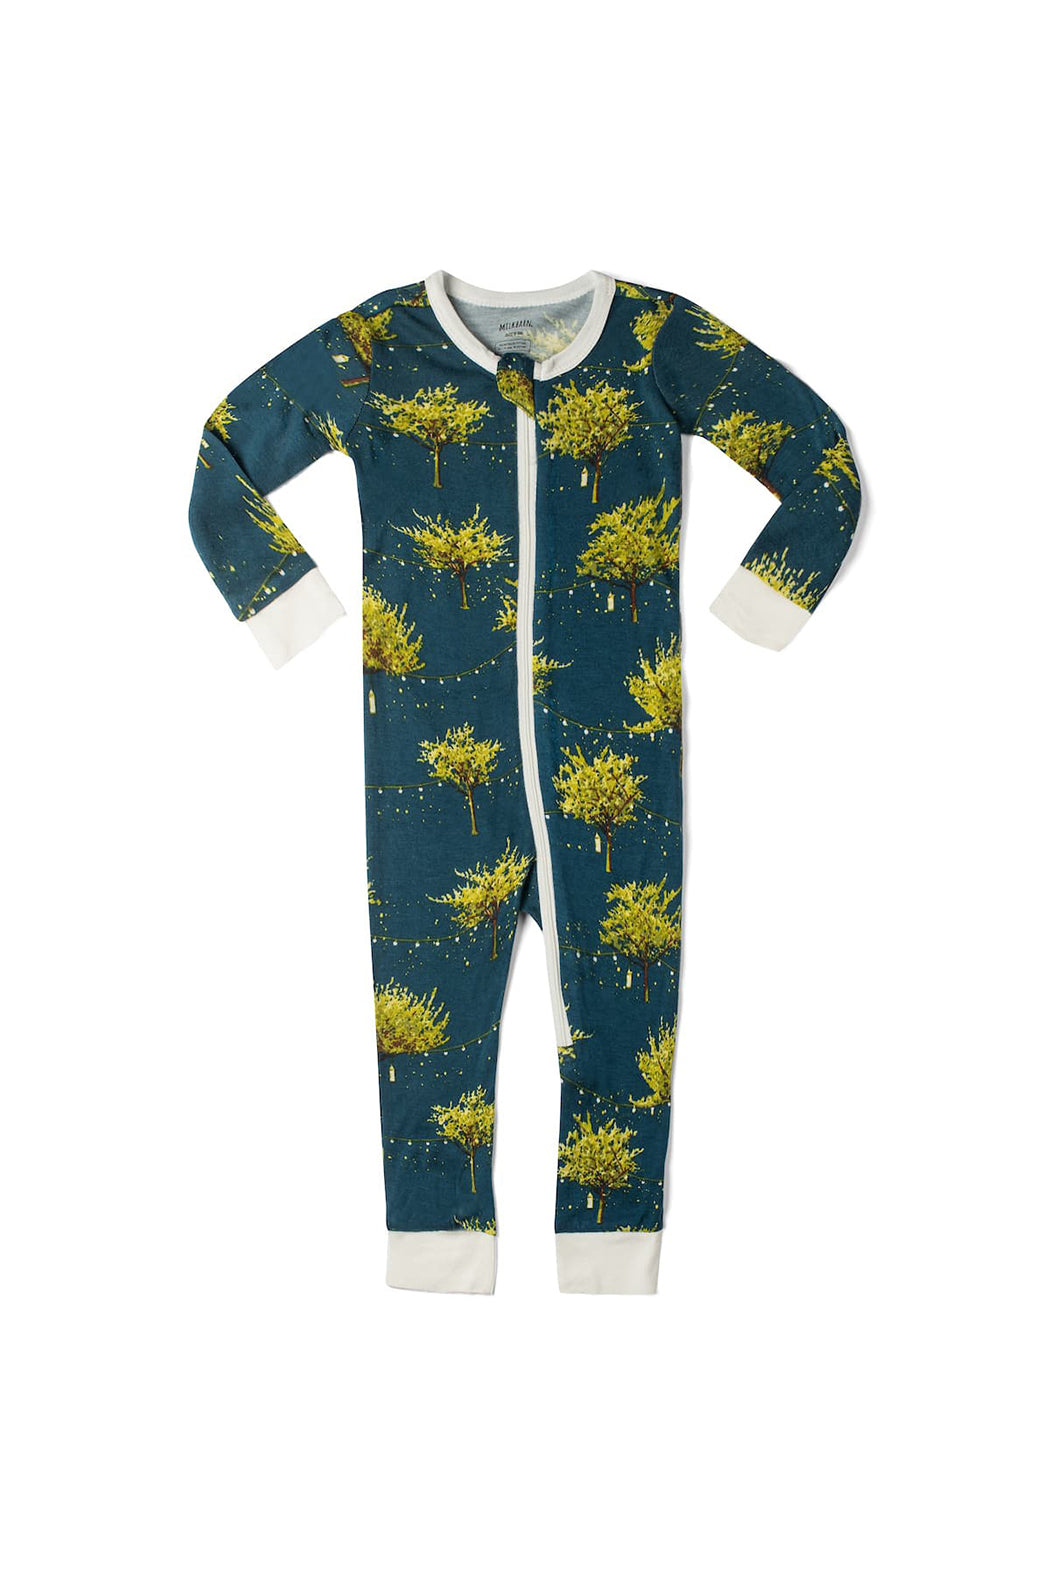 Milkbarn Bamboo Zipper Pajamas - Firefly – Hopscotch Kids OR